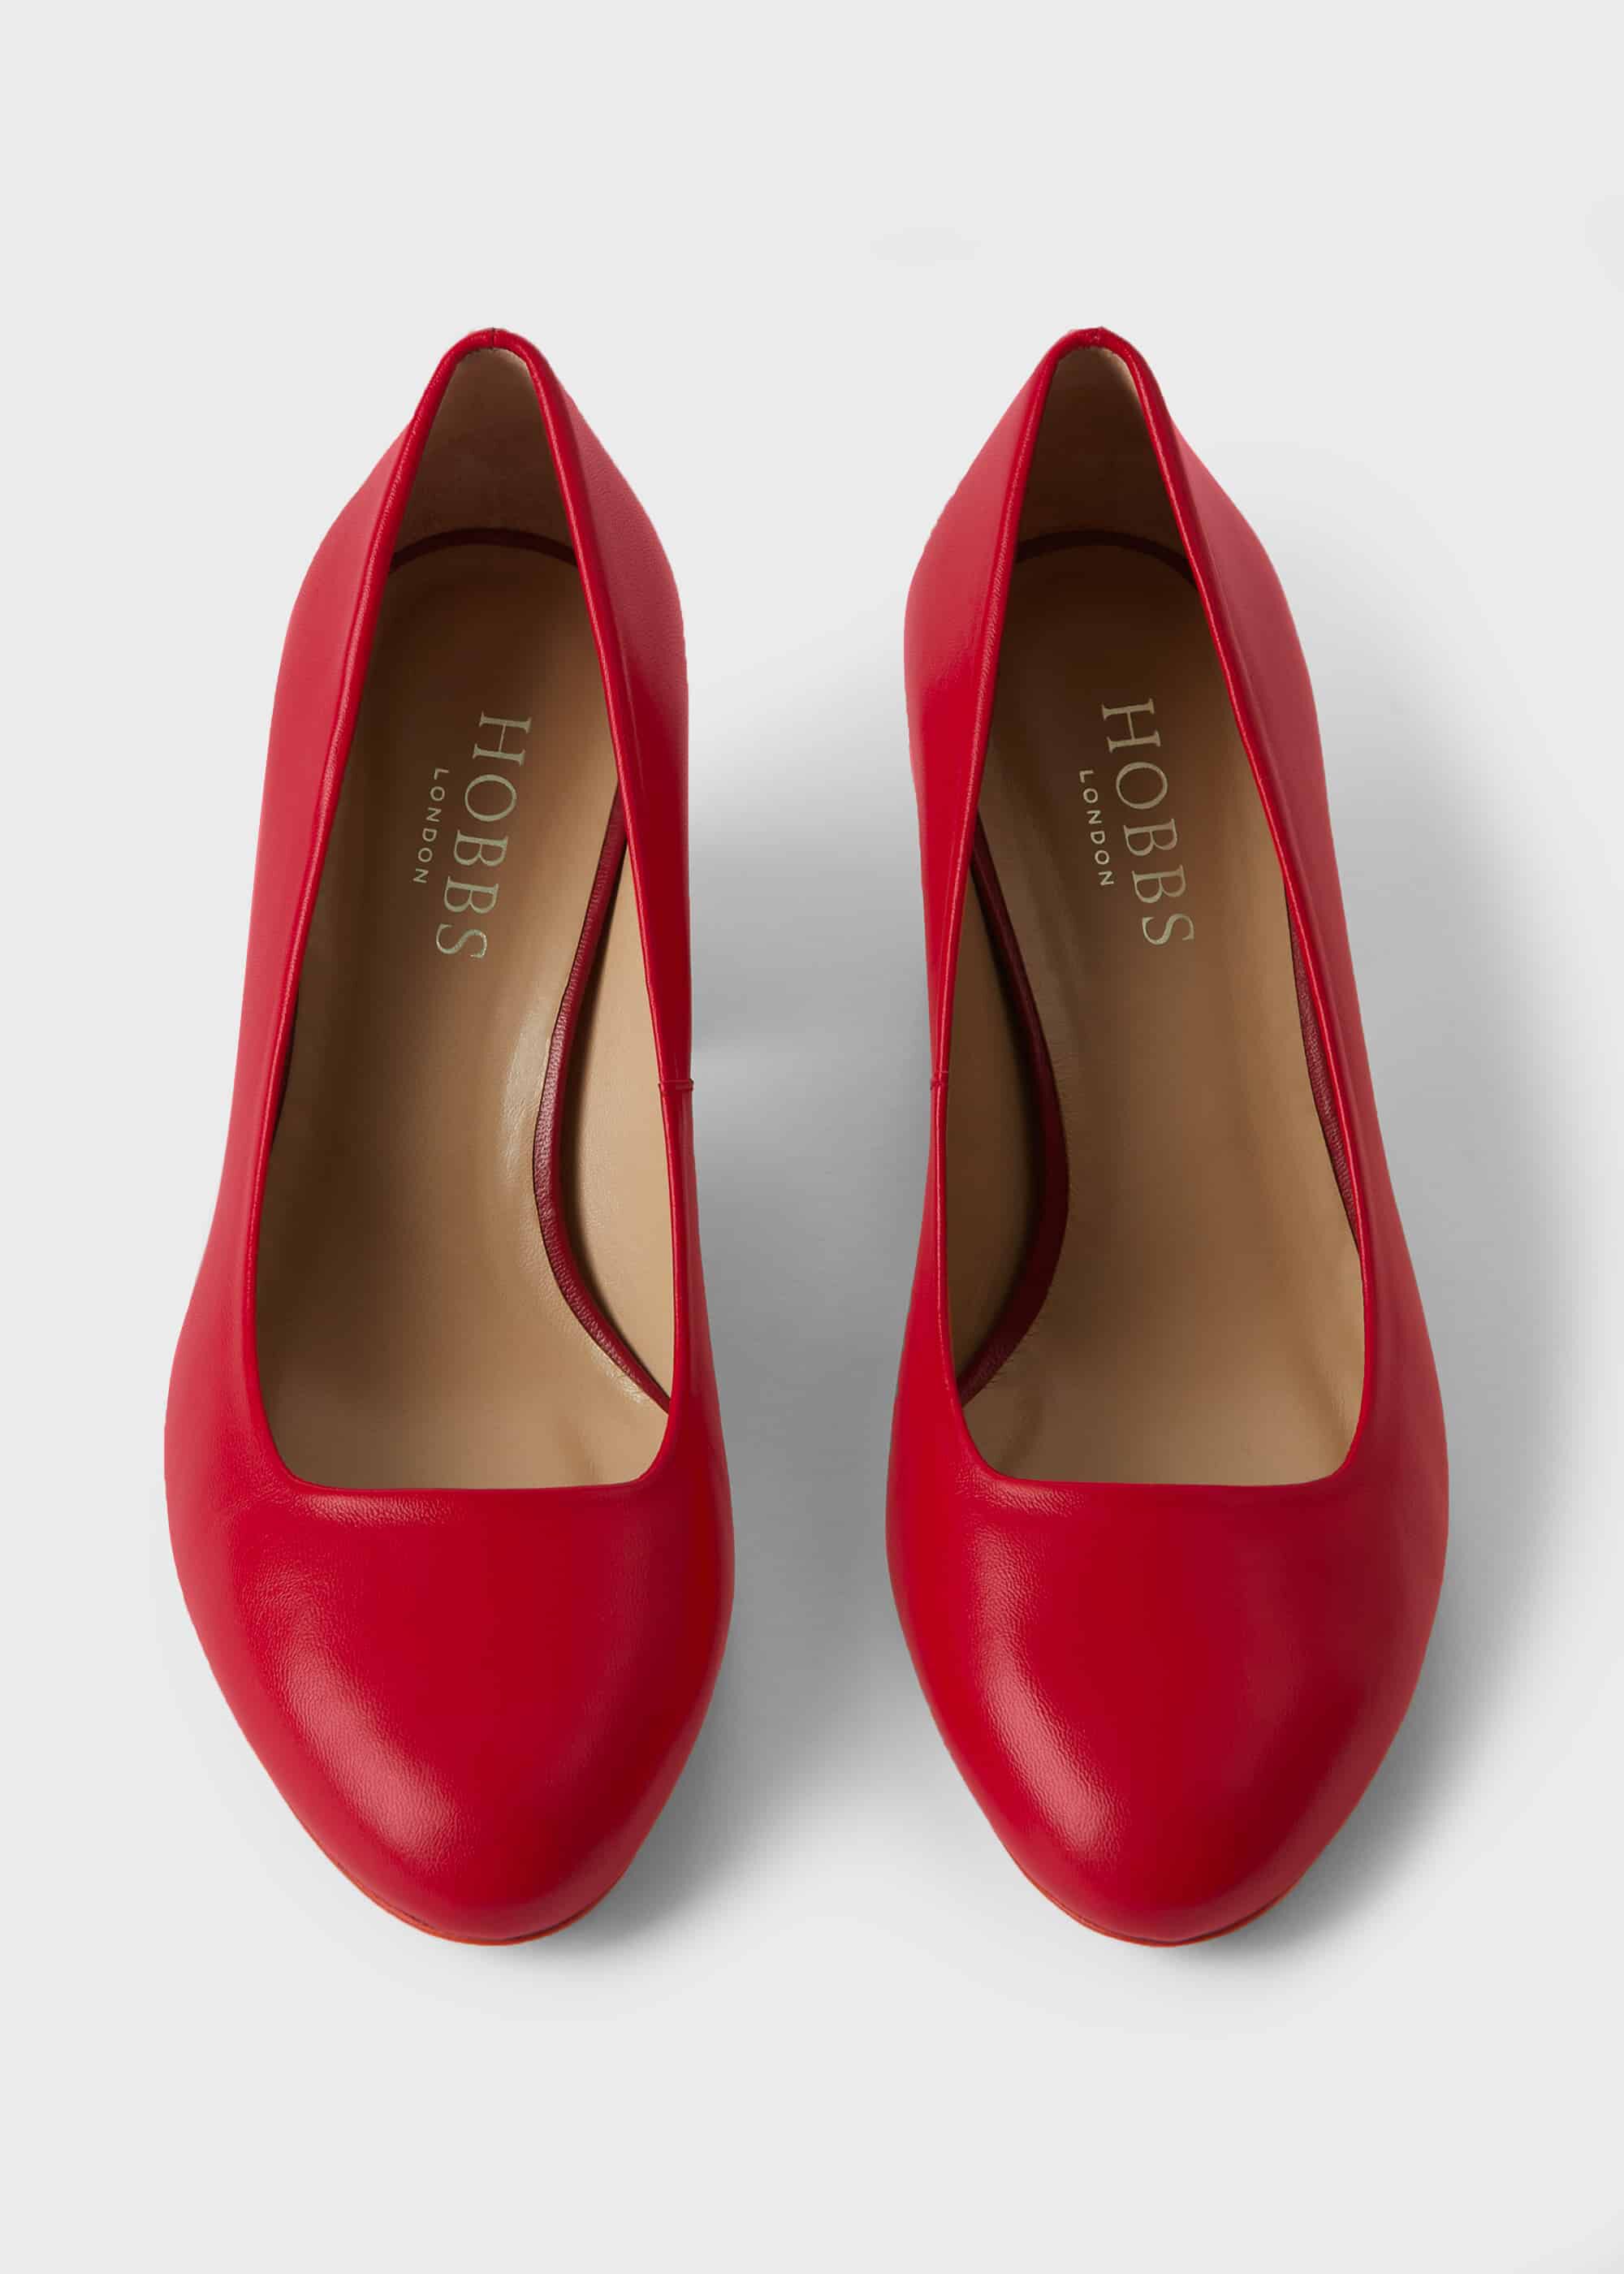 red heels wide fit